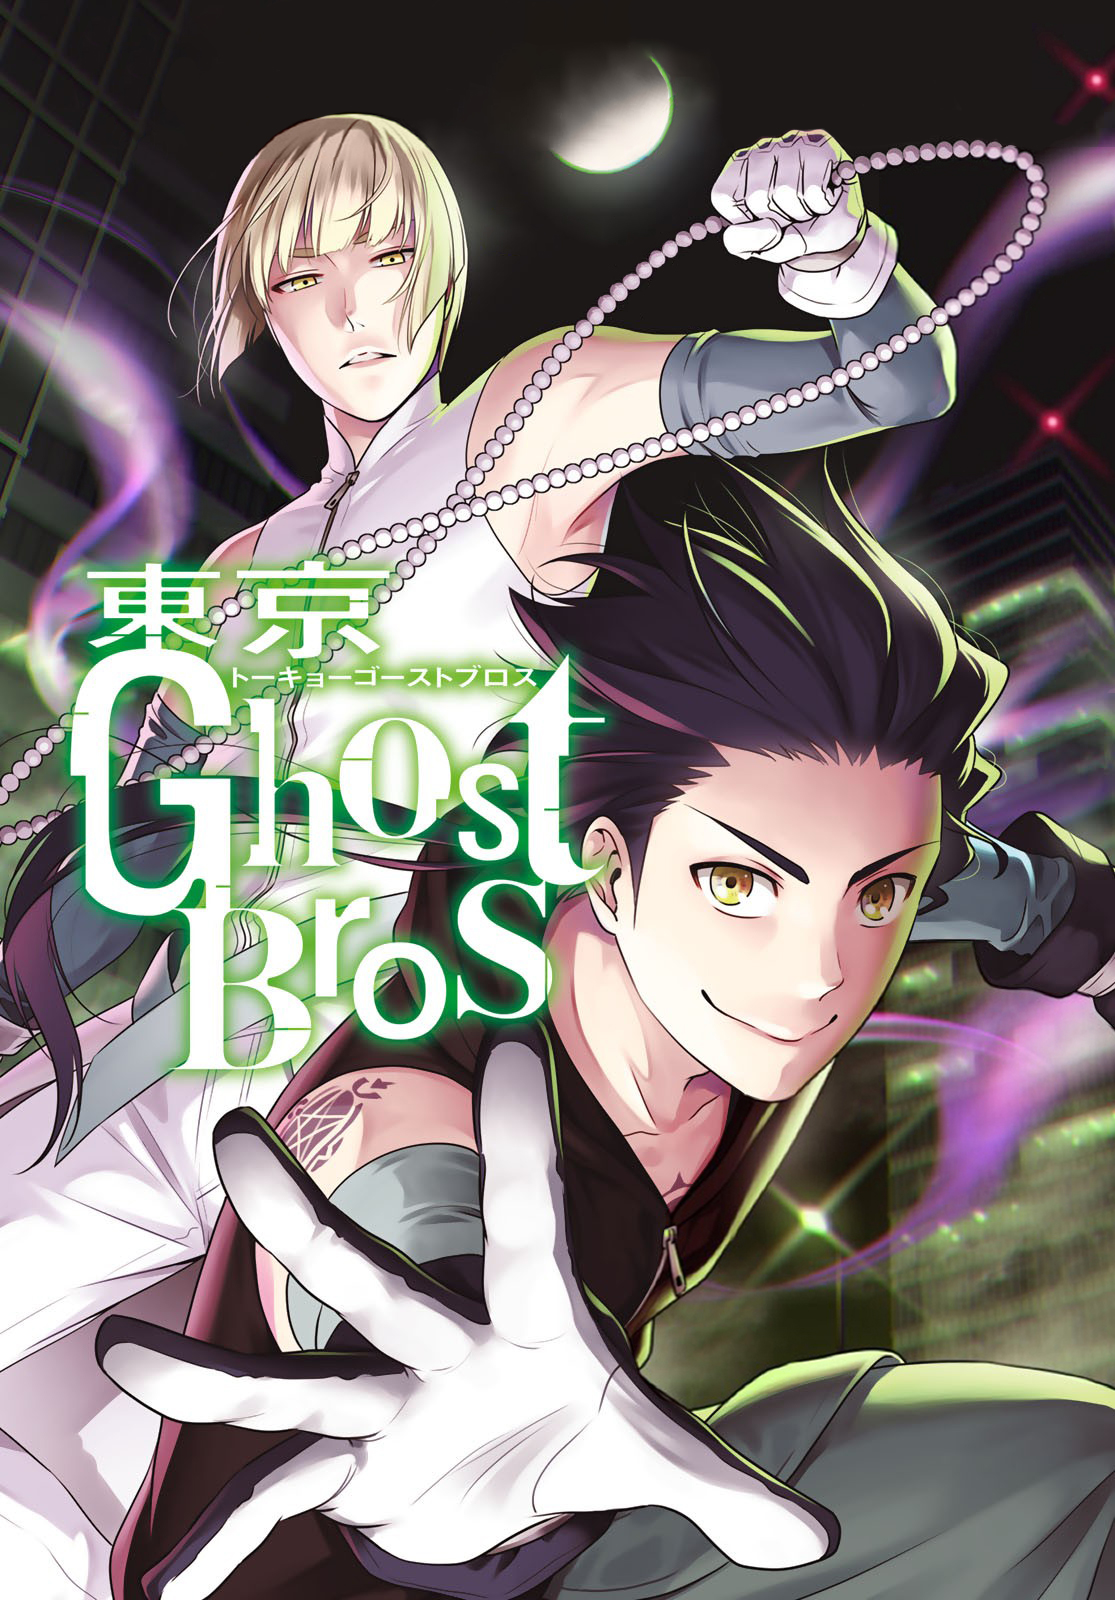 Tokyo Ghost Bros